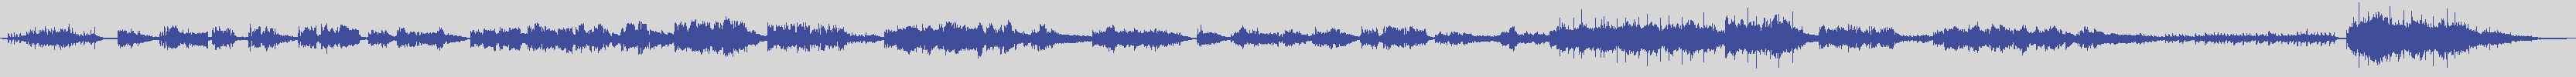 digiphonic_records [DPR001] Nino D'Angelo - E Vinciute Tu [Original Mix] audio wave form